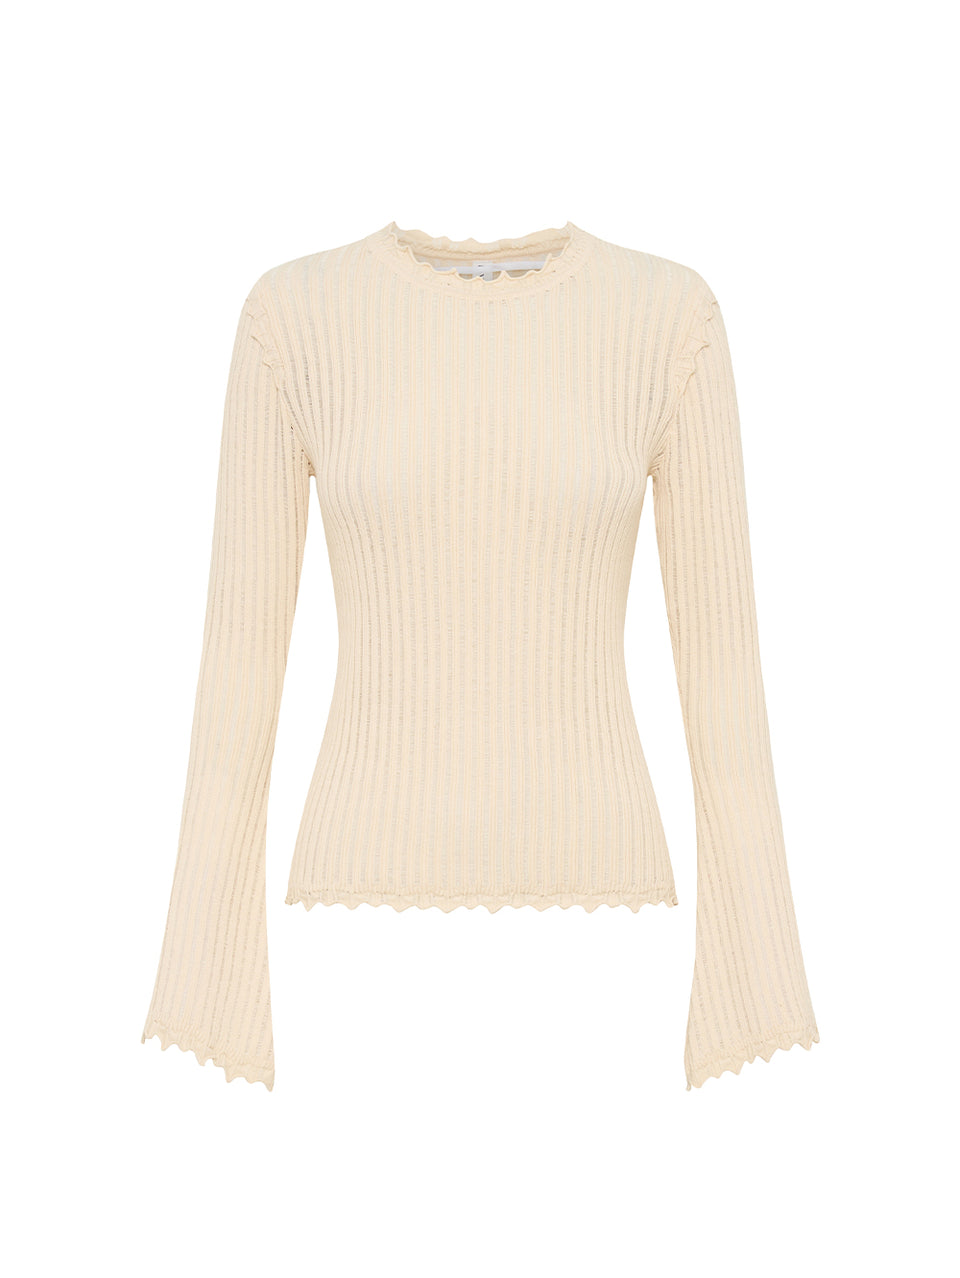 Diana Knit Top Cream KIVARI | Cream knit top